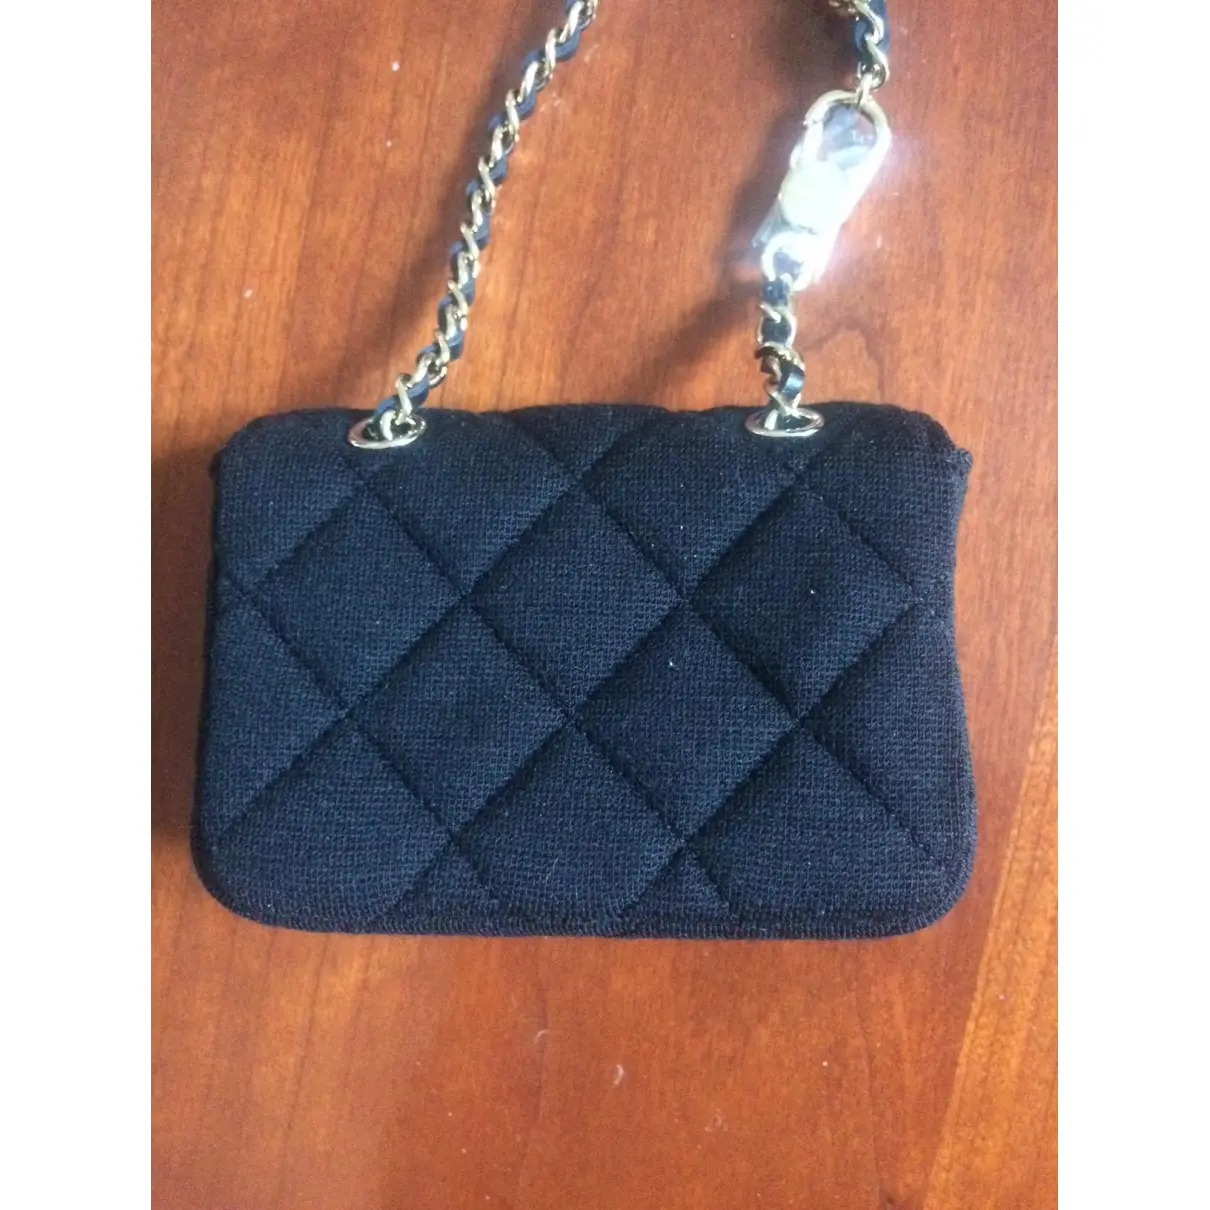 Buy Chanel Handbag online